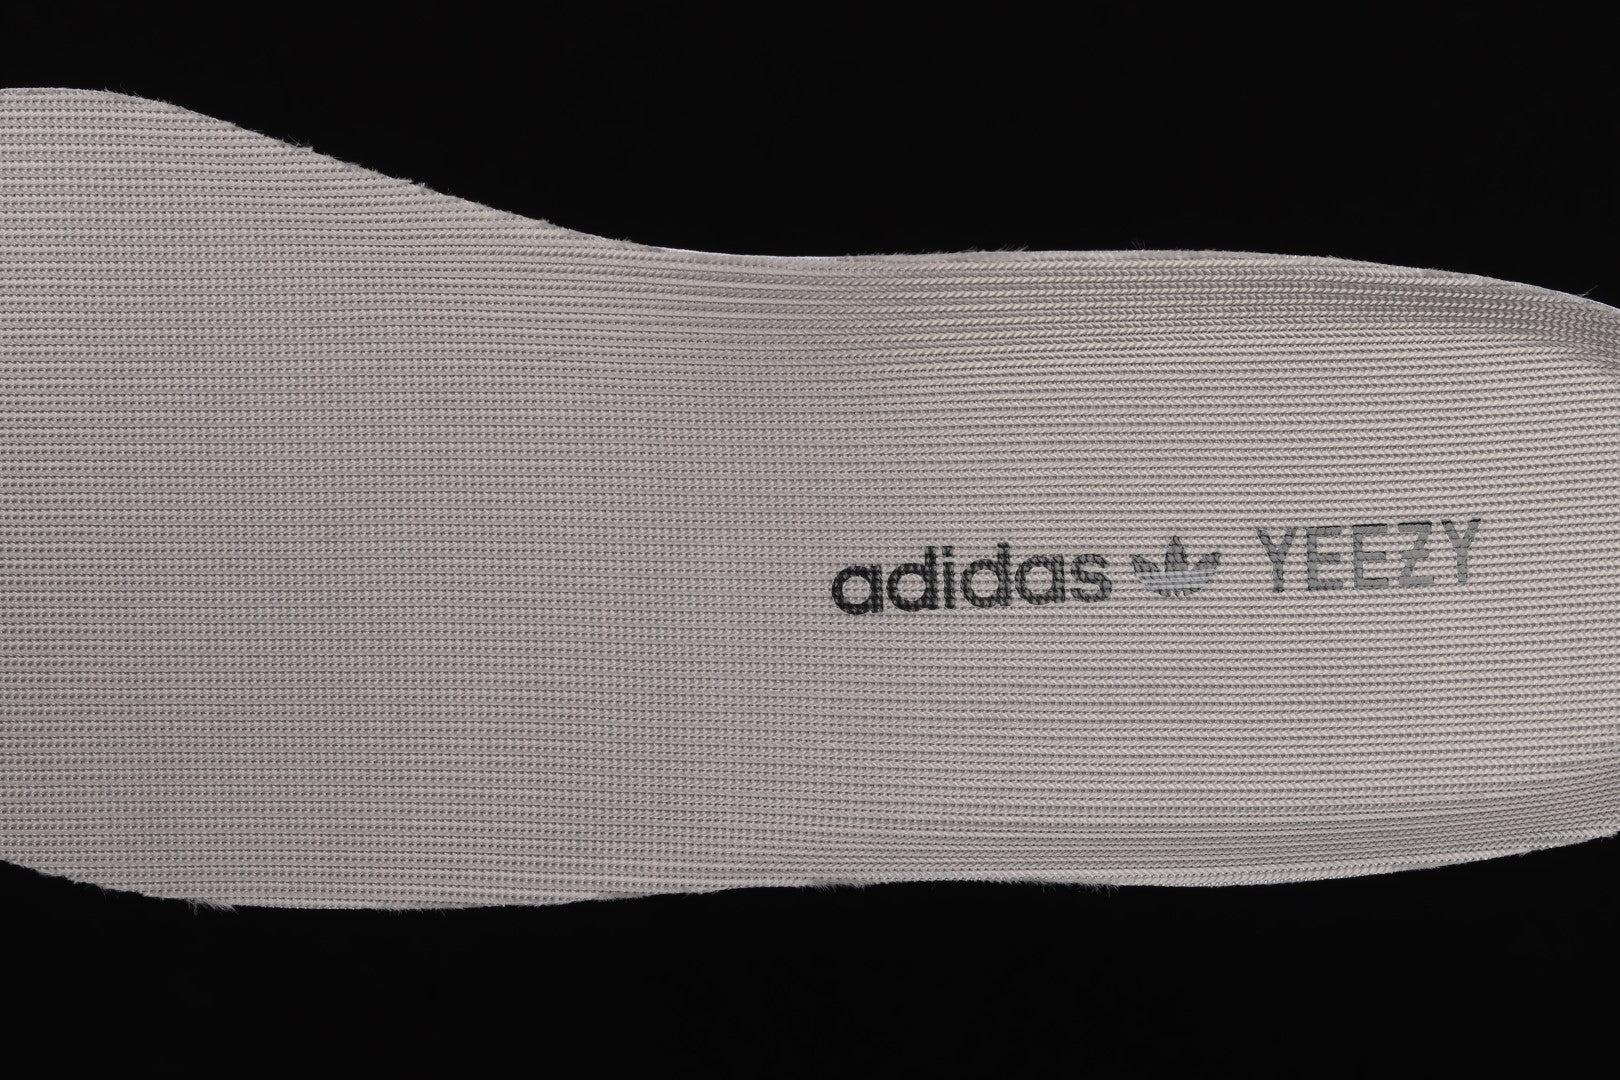 adidasMens Yeezy Boost 350 V2 - Beluga Reflective